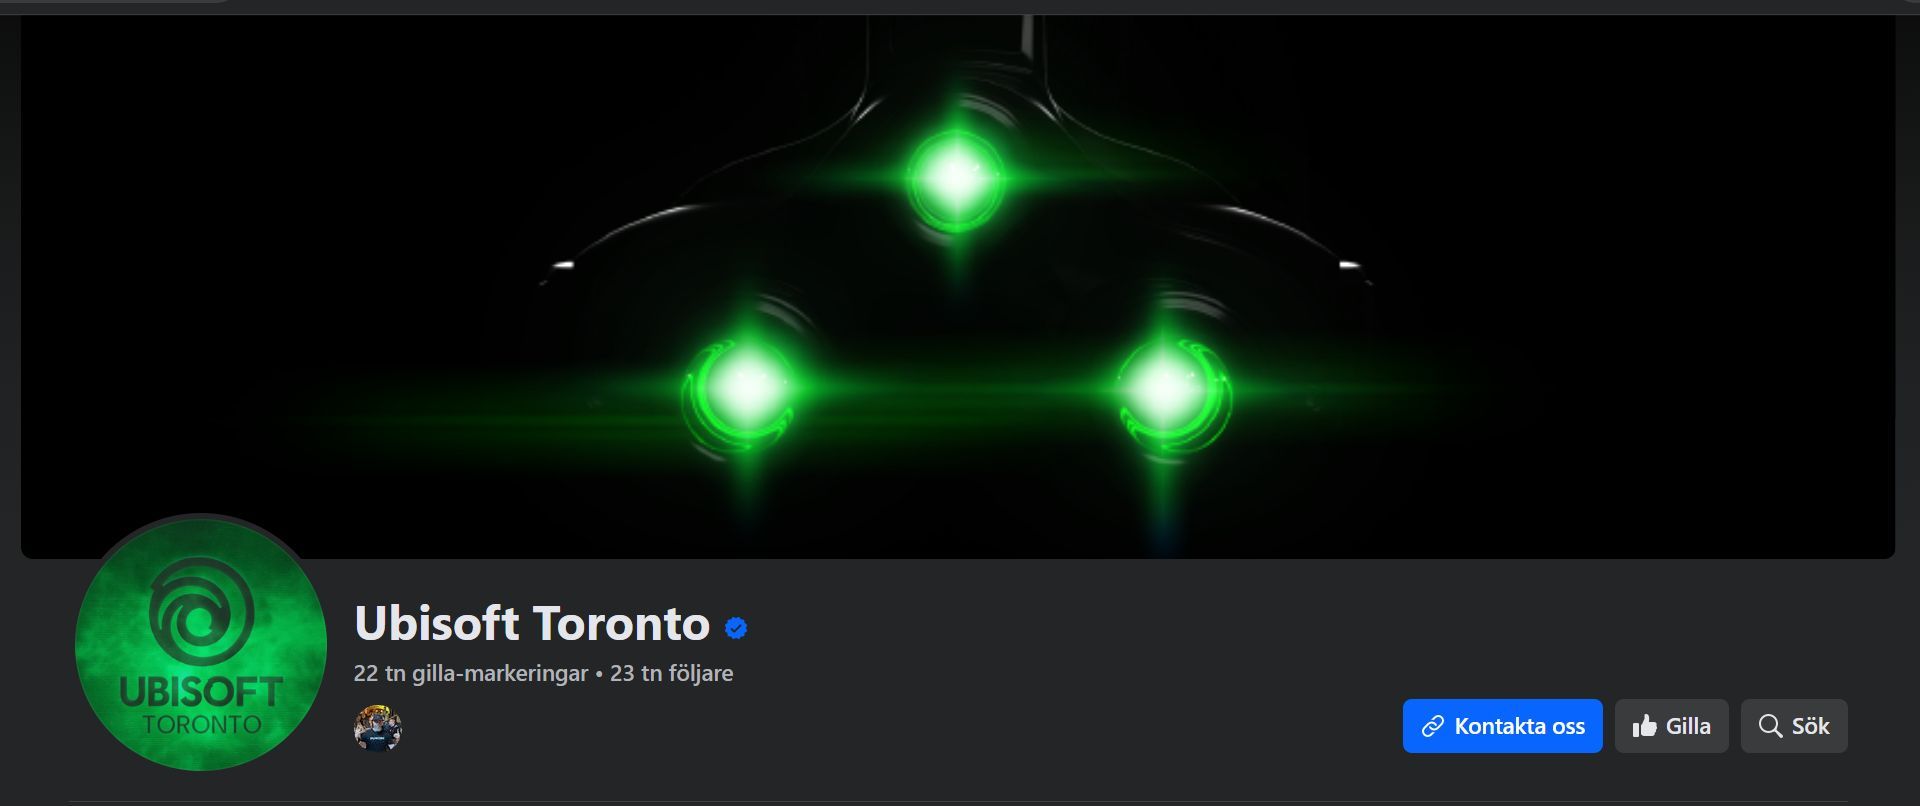 Ubisoft Toronto présentera probablement Splinter Cell Remake en juin.